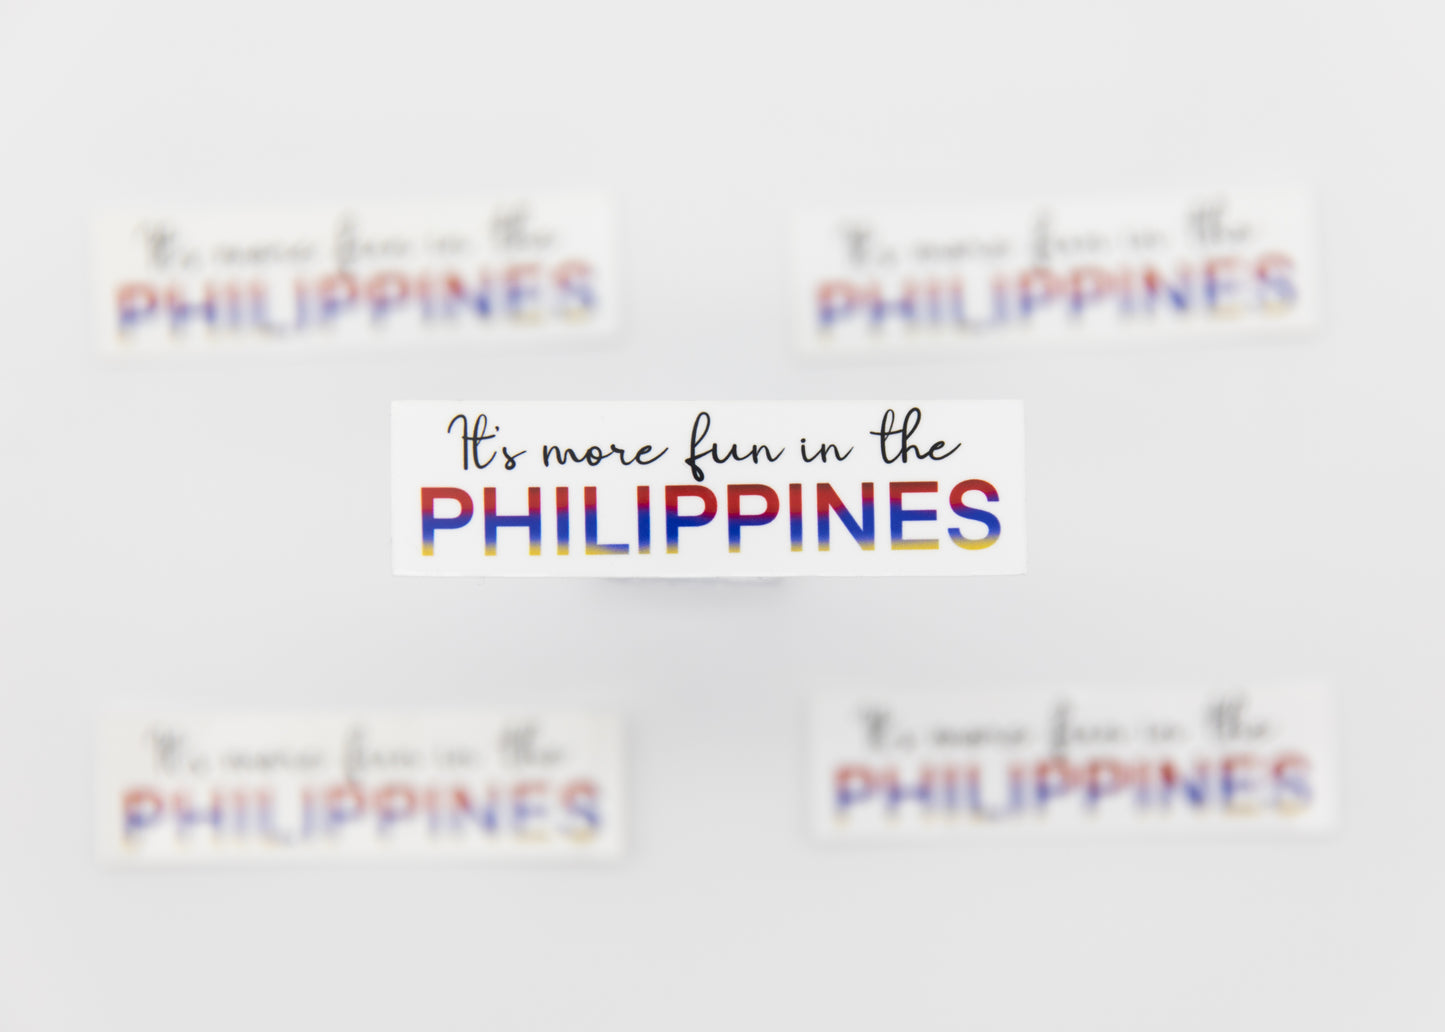 It's more fun in the Philippines Sticker